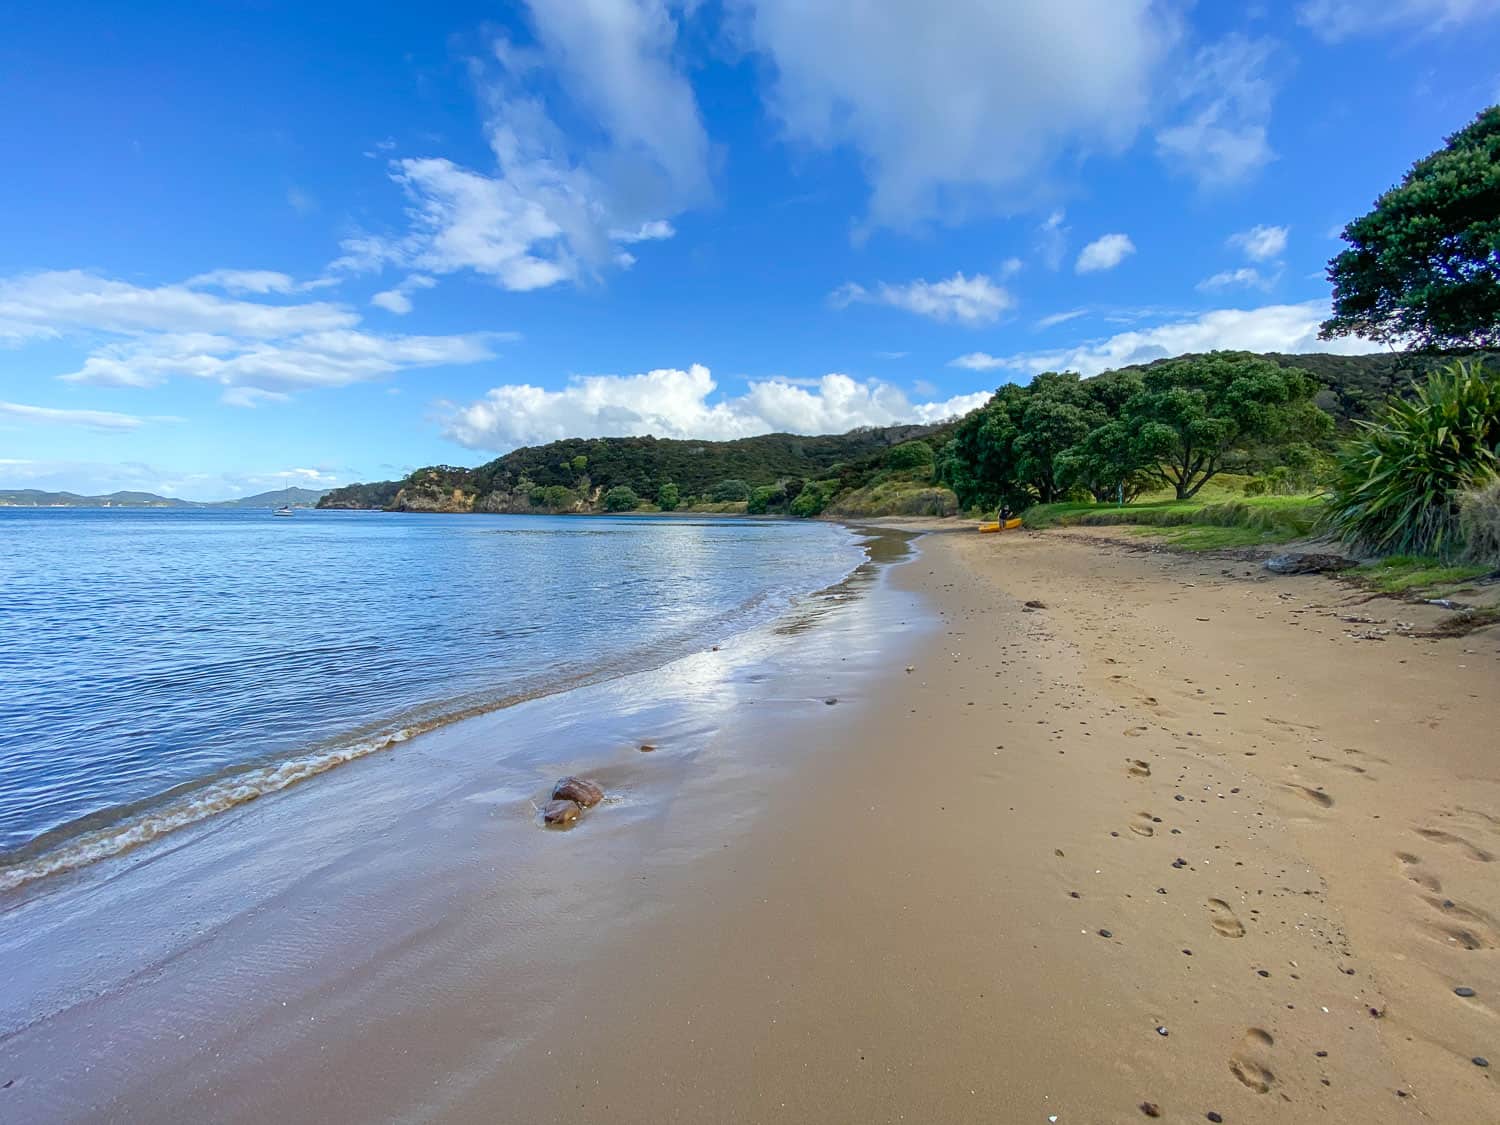 The beach at Waiwhapuku Bay, known as Army Bay, on Moturua Island in New Zealand's Bay of Islands